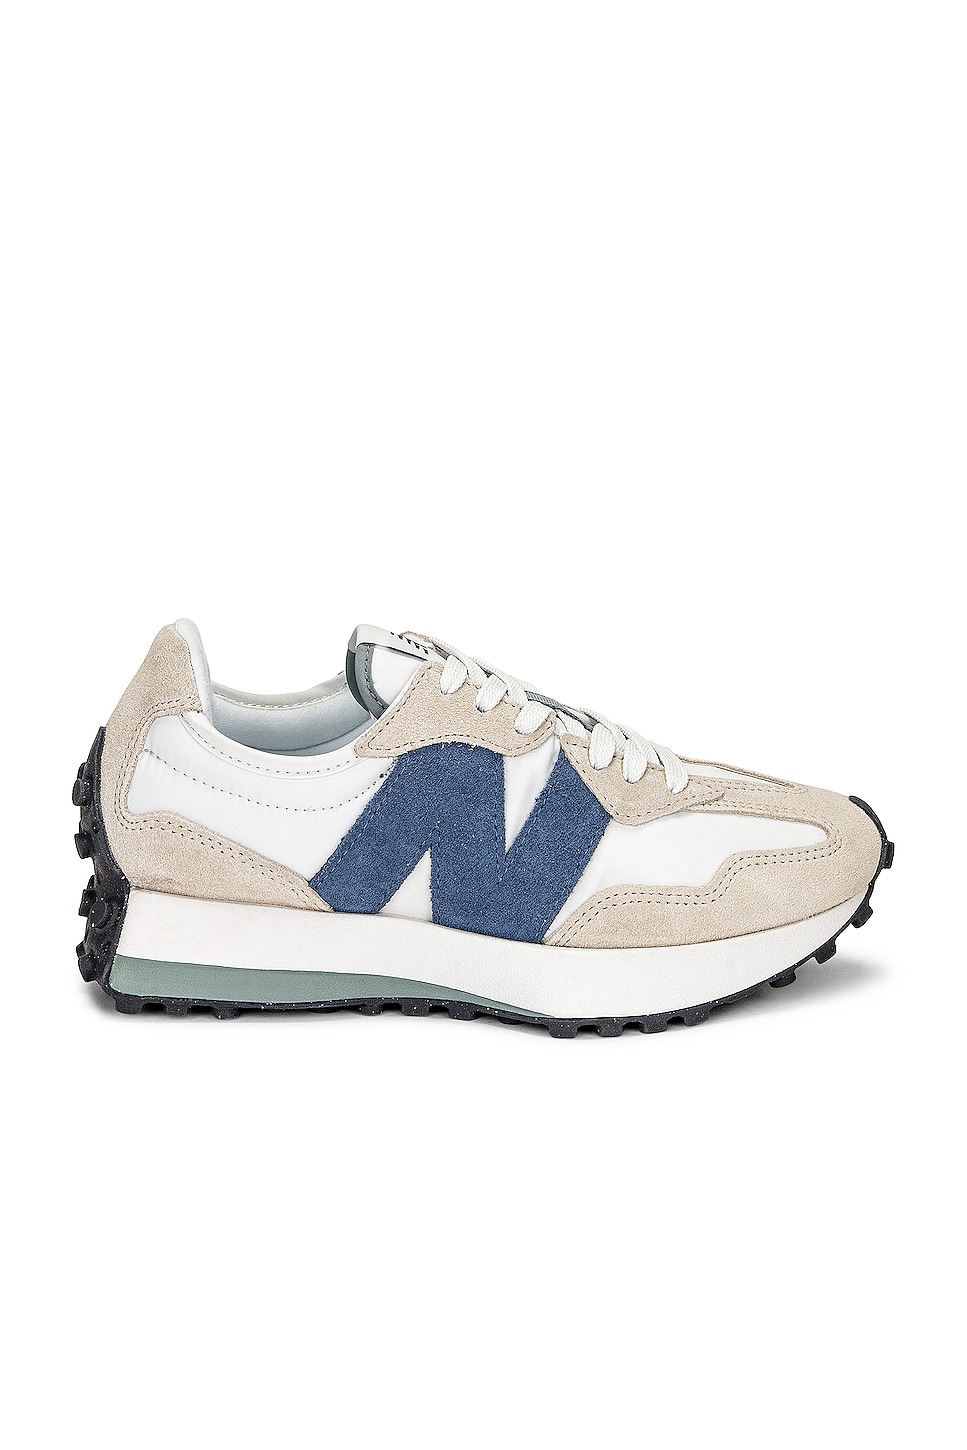 Image 1 of New Balance 327 Sneaker in Sandstone & Mercury Blue